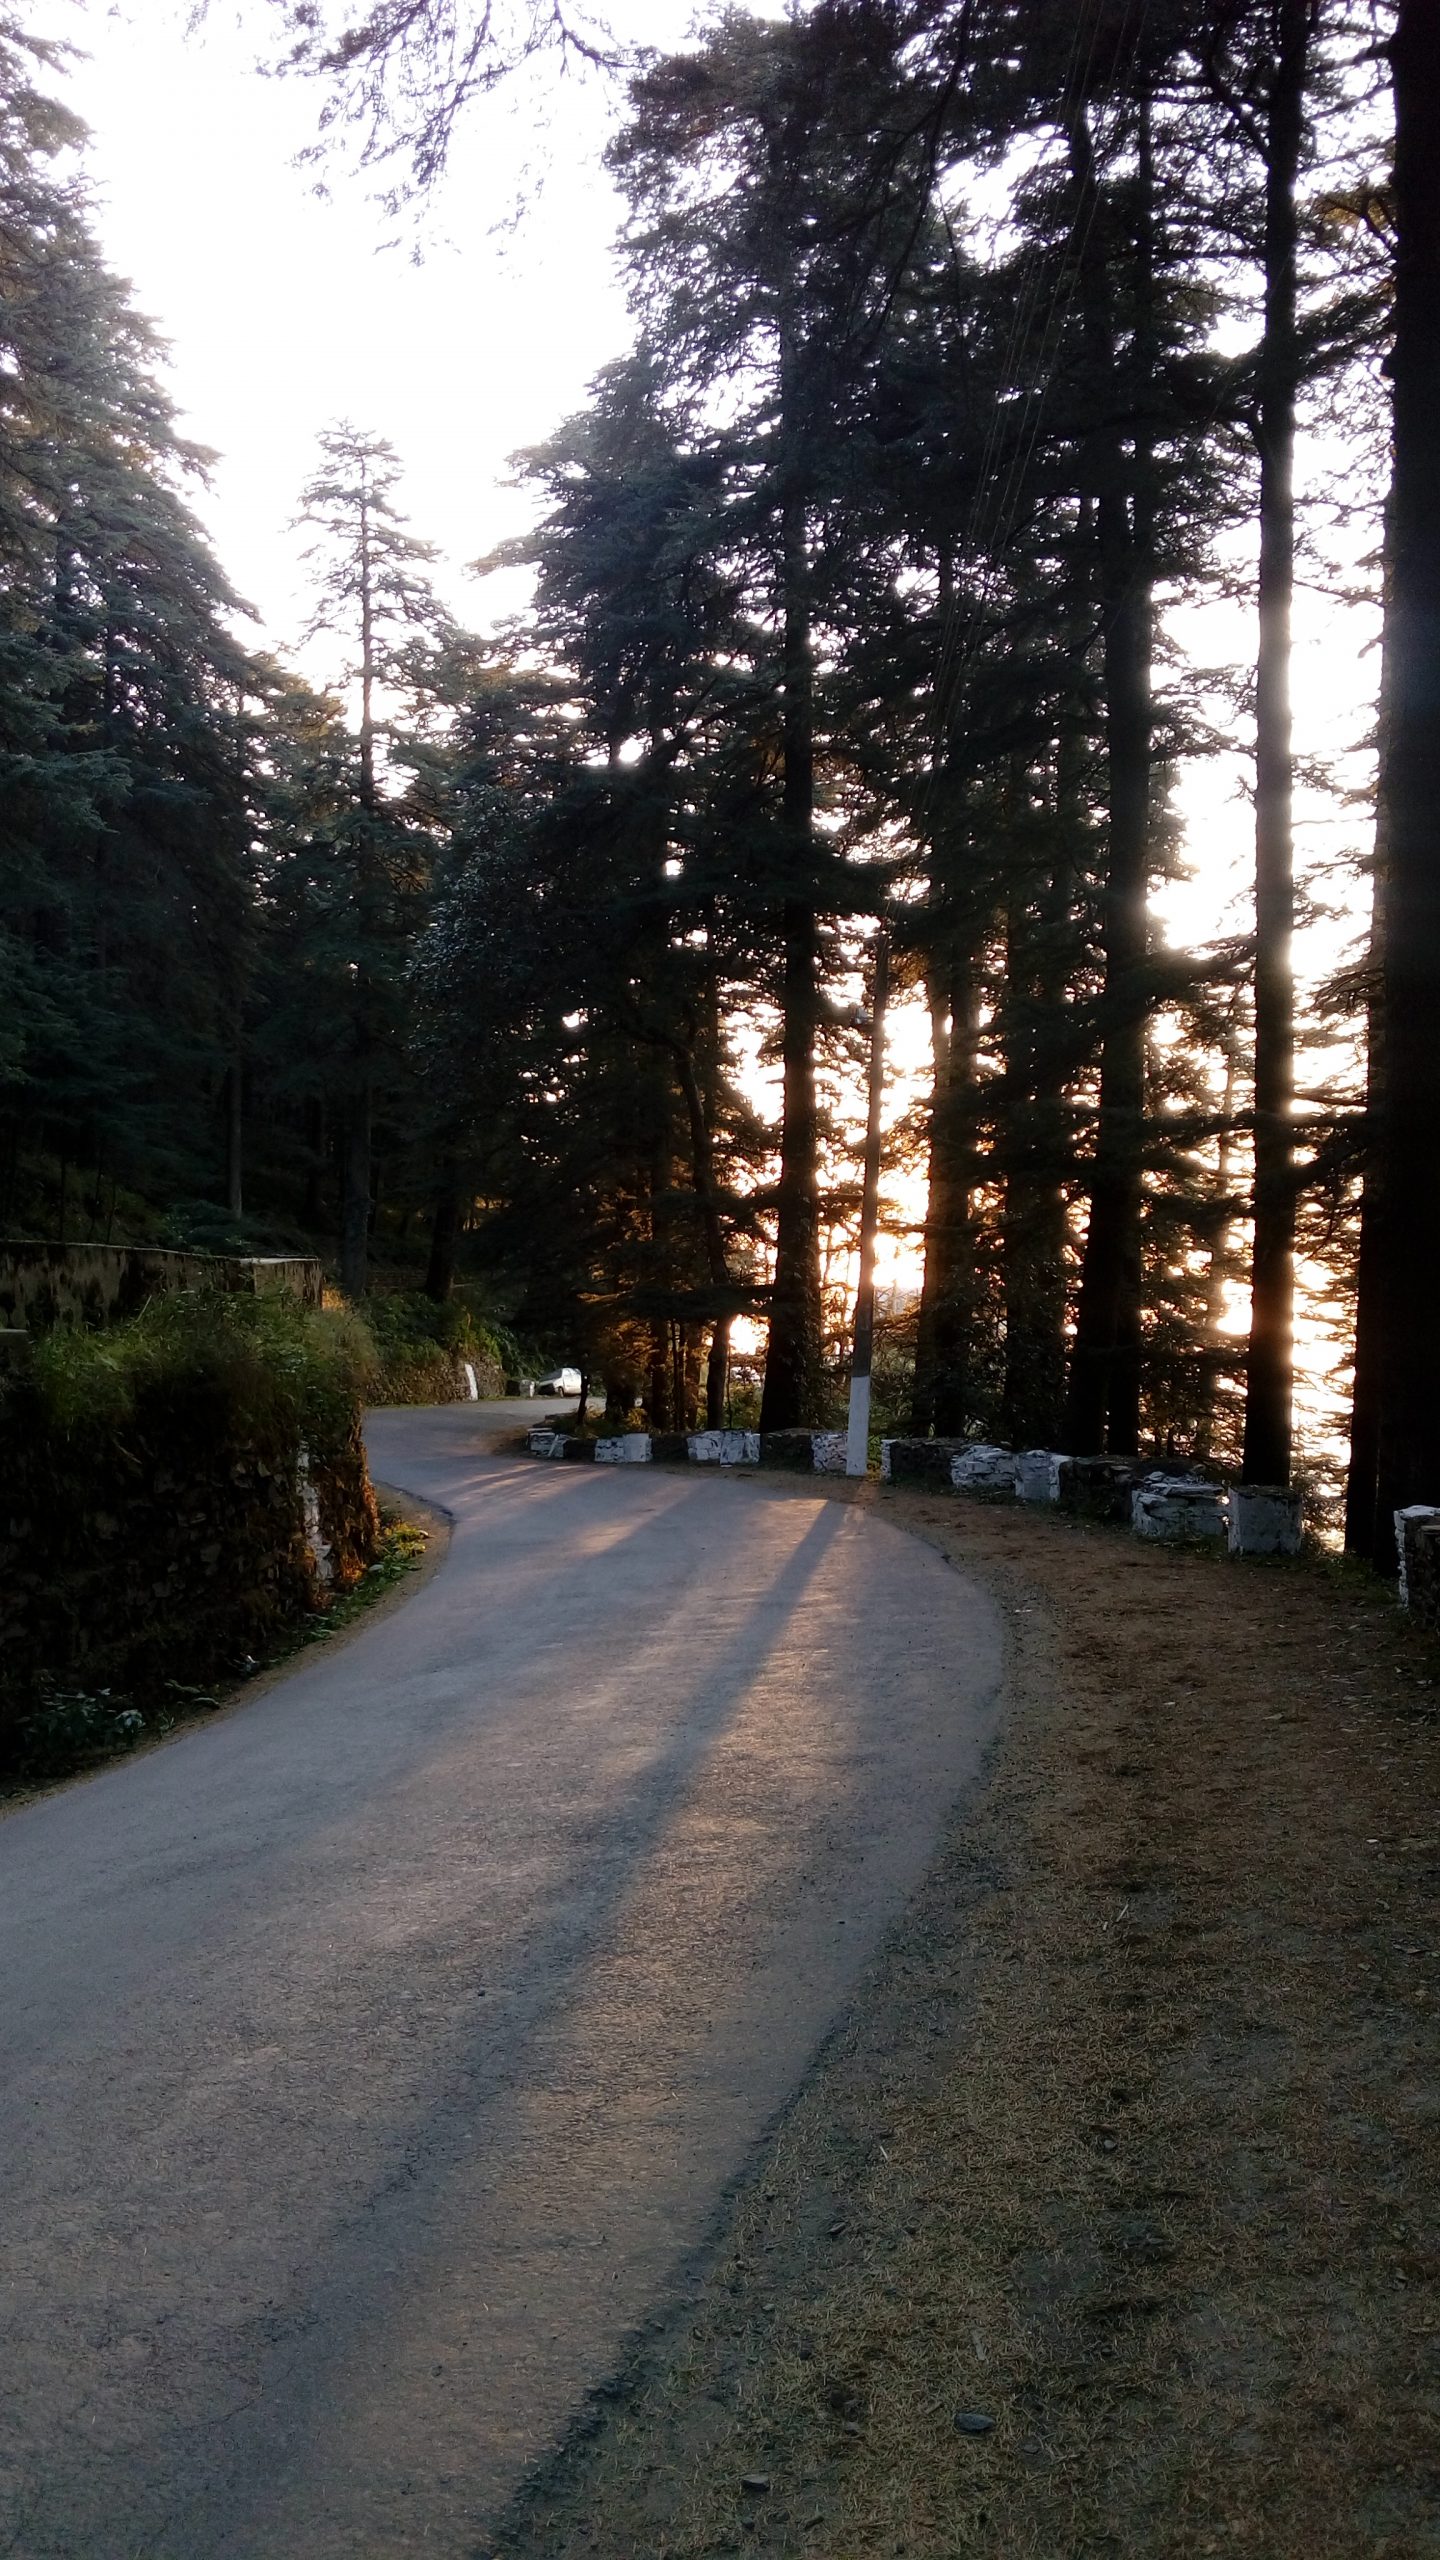 Highway of Chail, Himachal Pradesh